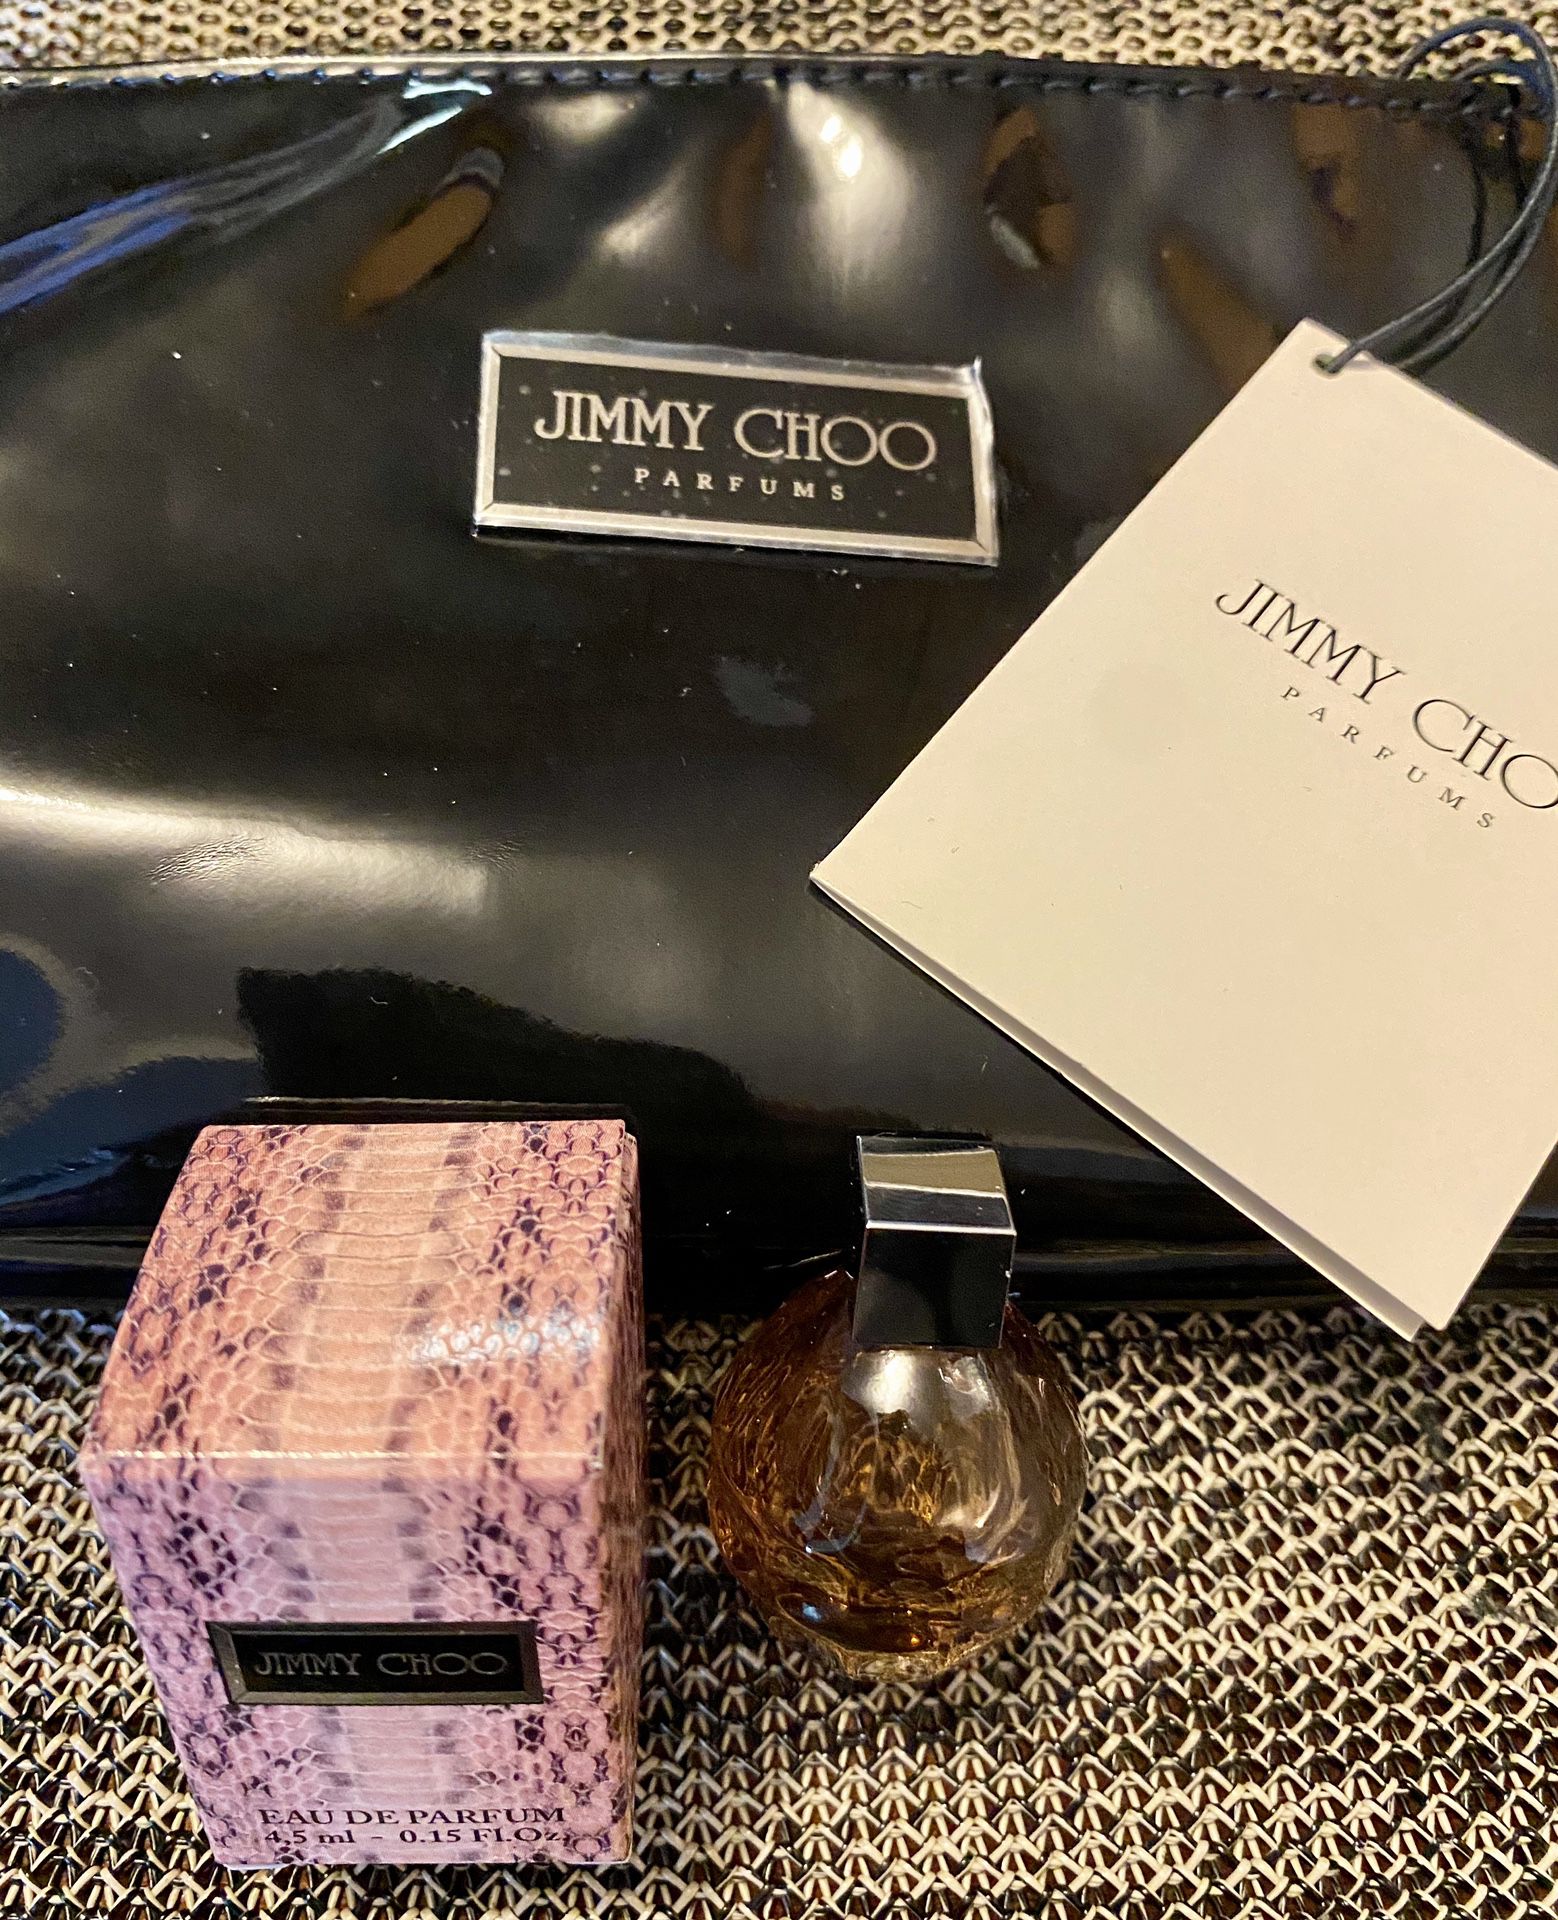 Jimmy Choo - fragrance Jimmy Choo eau de Parfum & cosmetic bag.